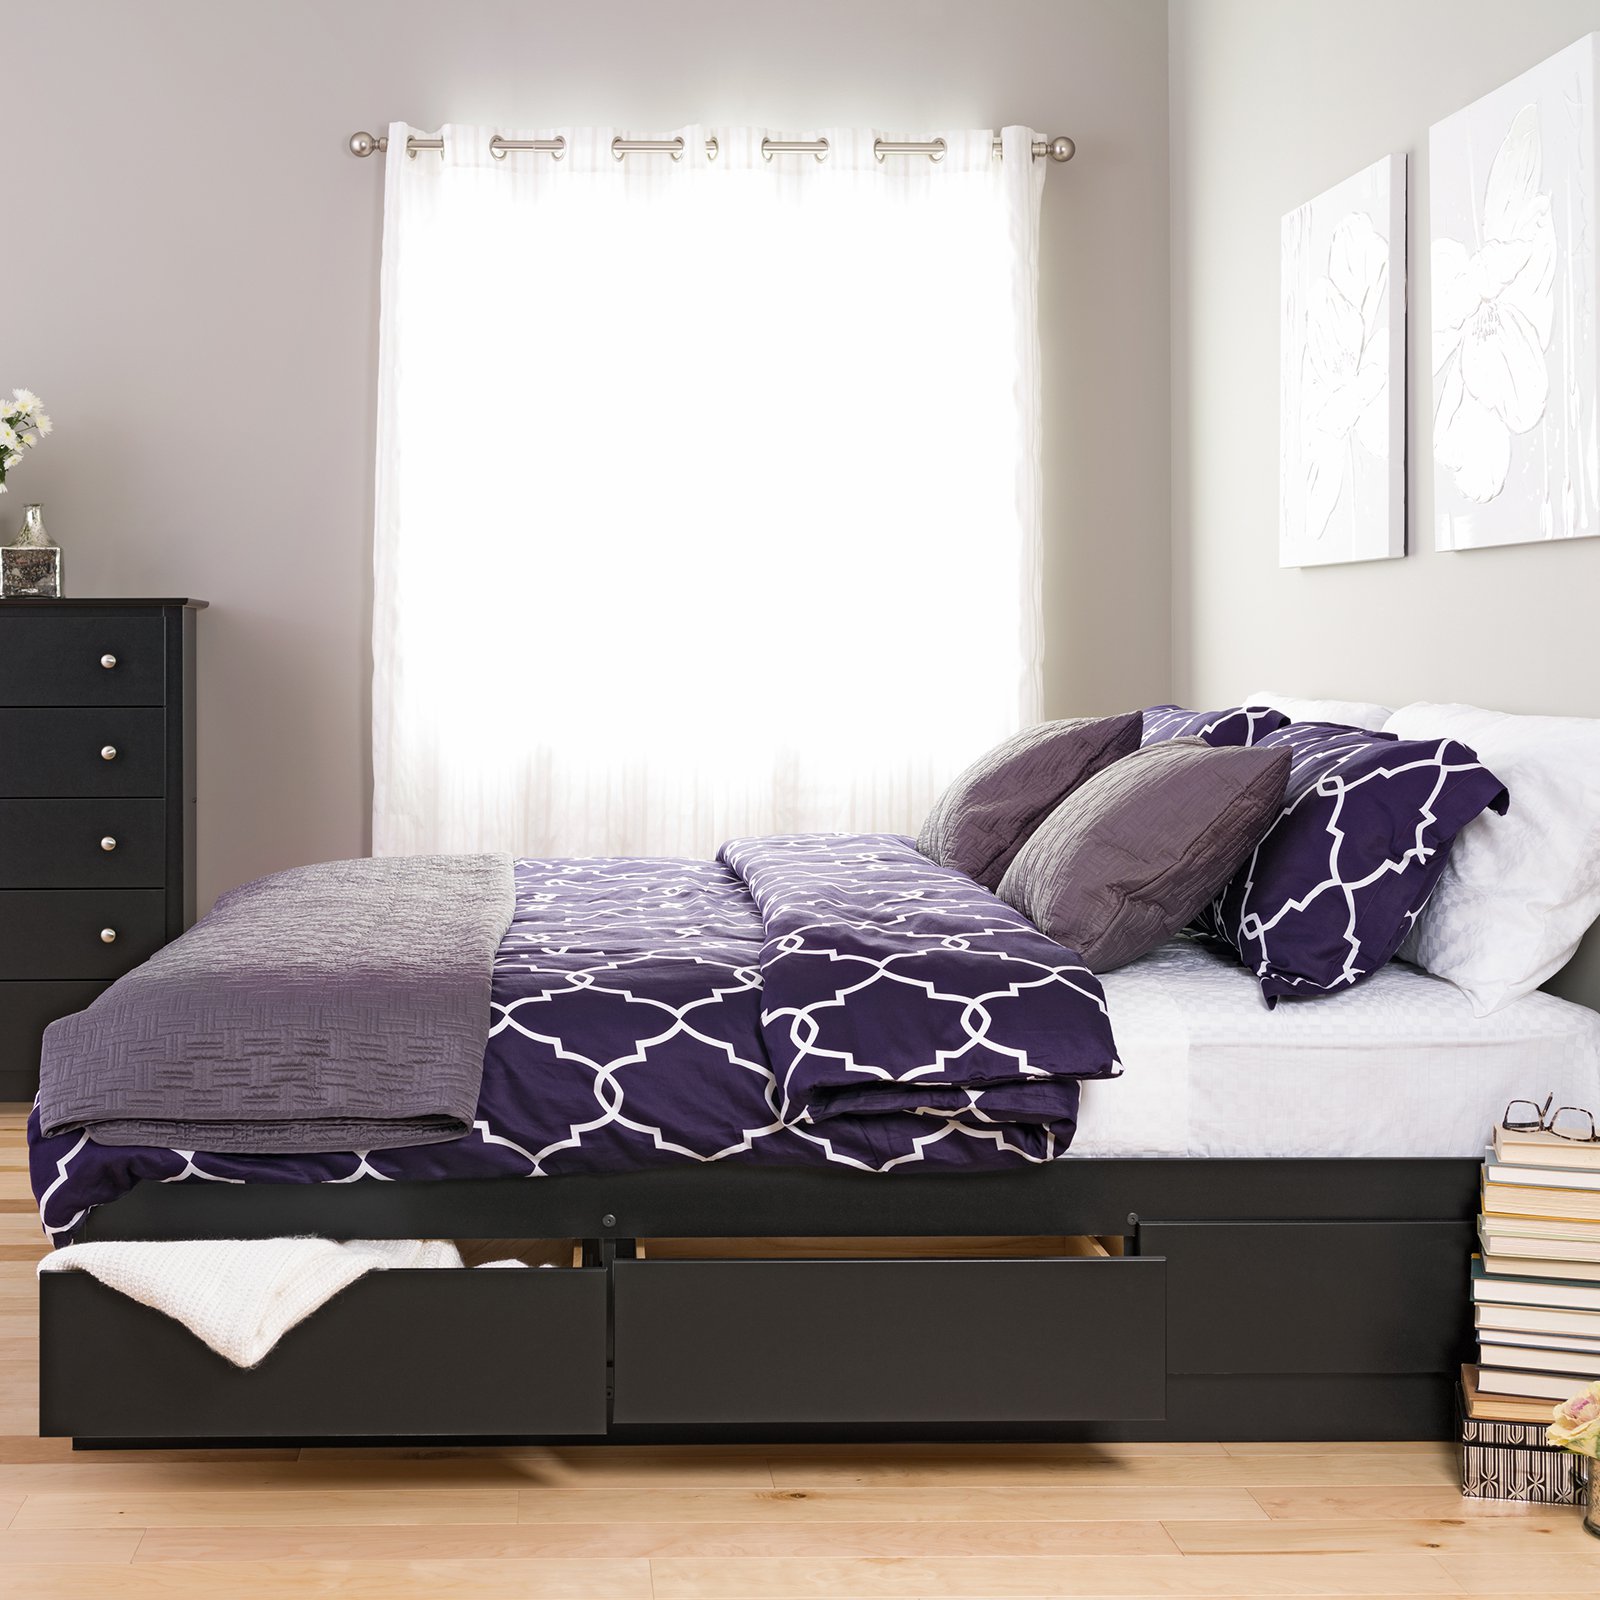 Brown Wooden Platform Bed With Blue Floral Bed Mat